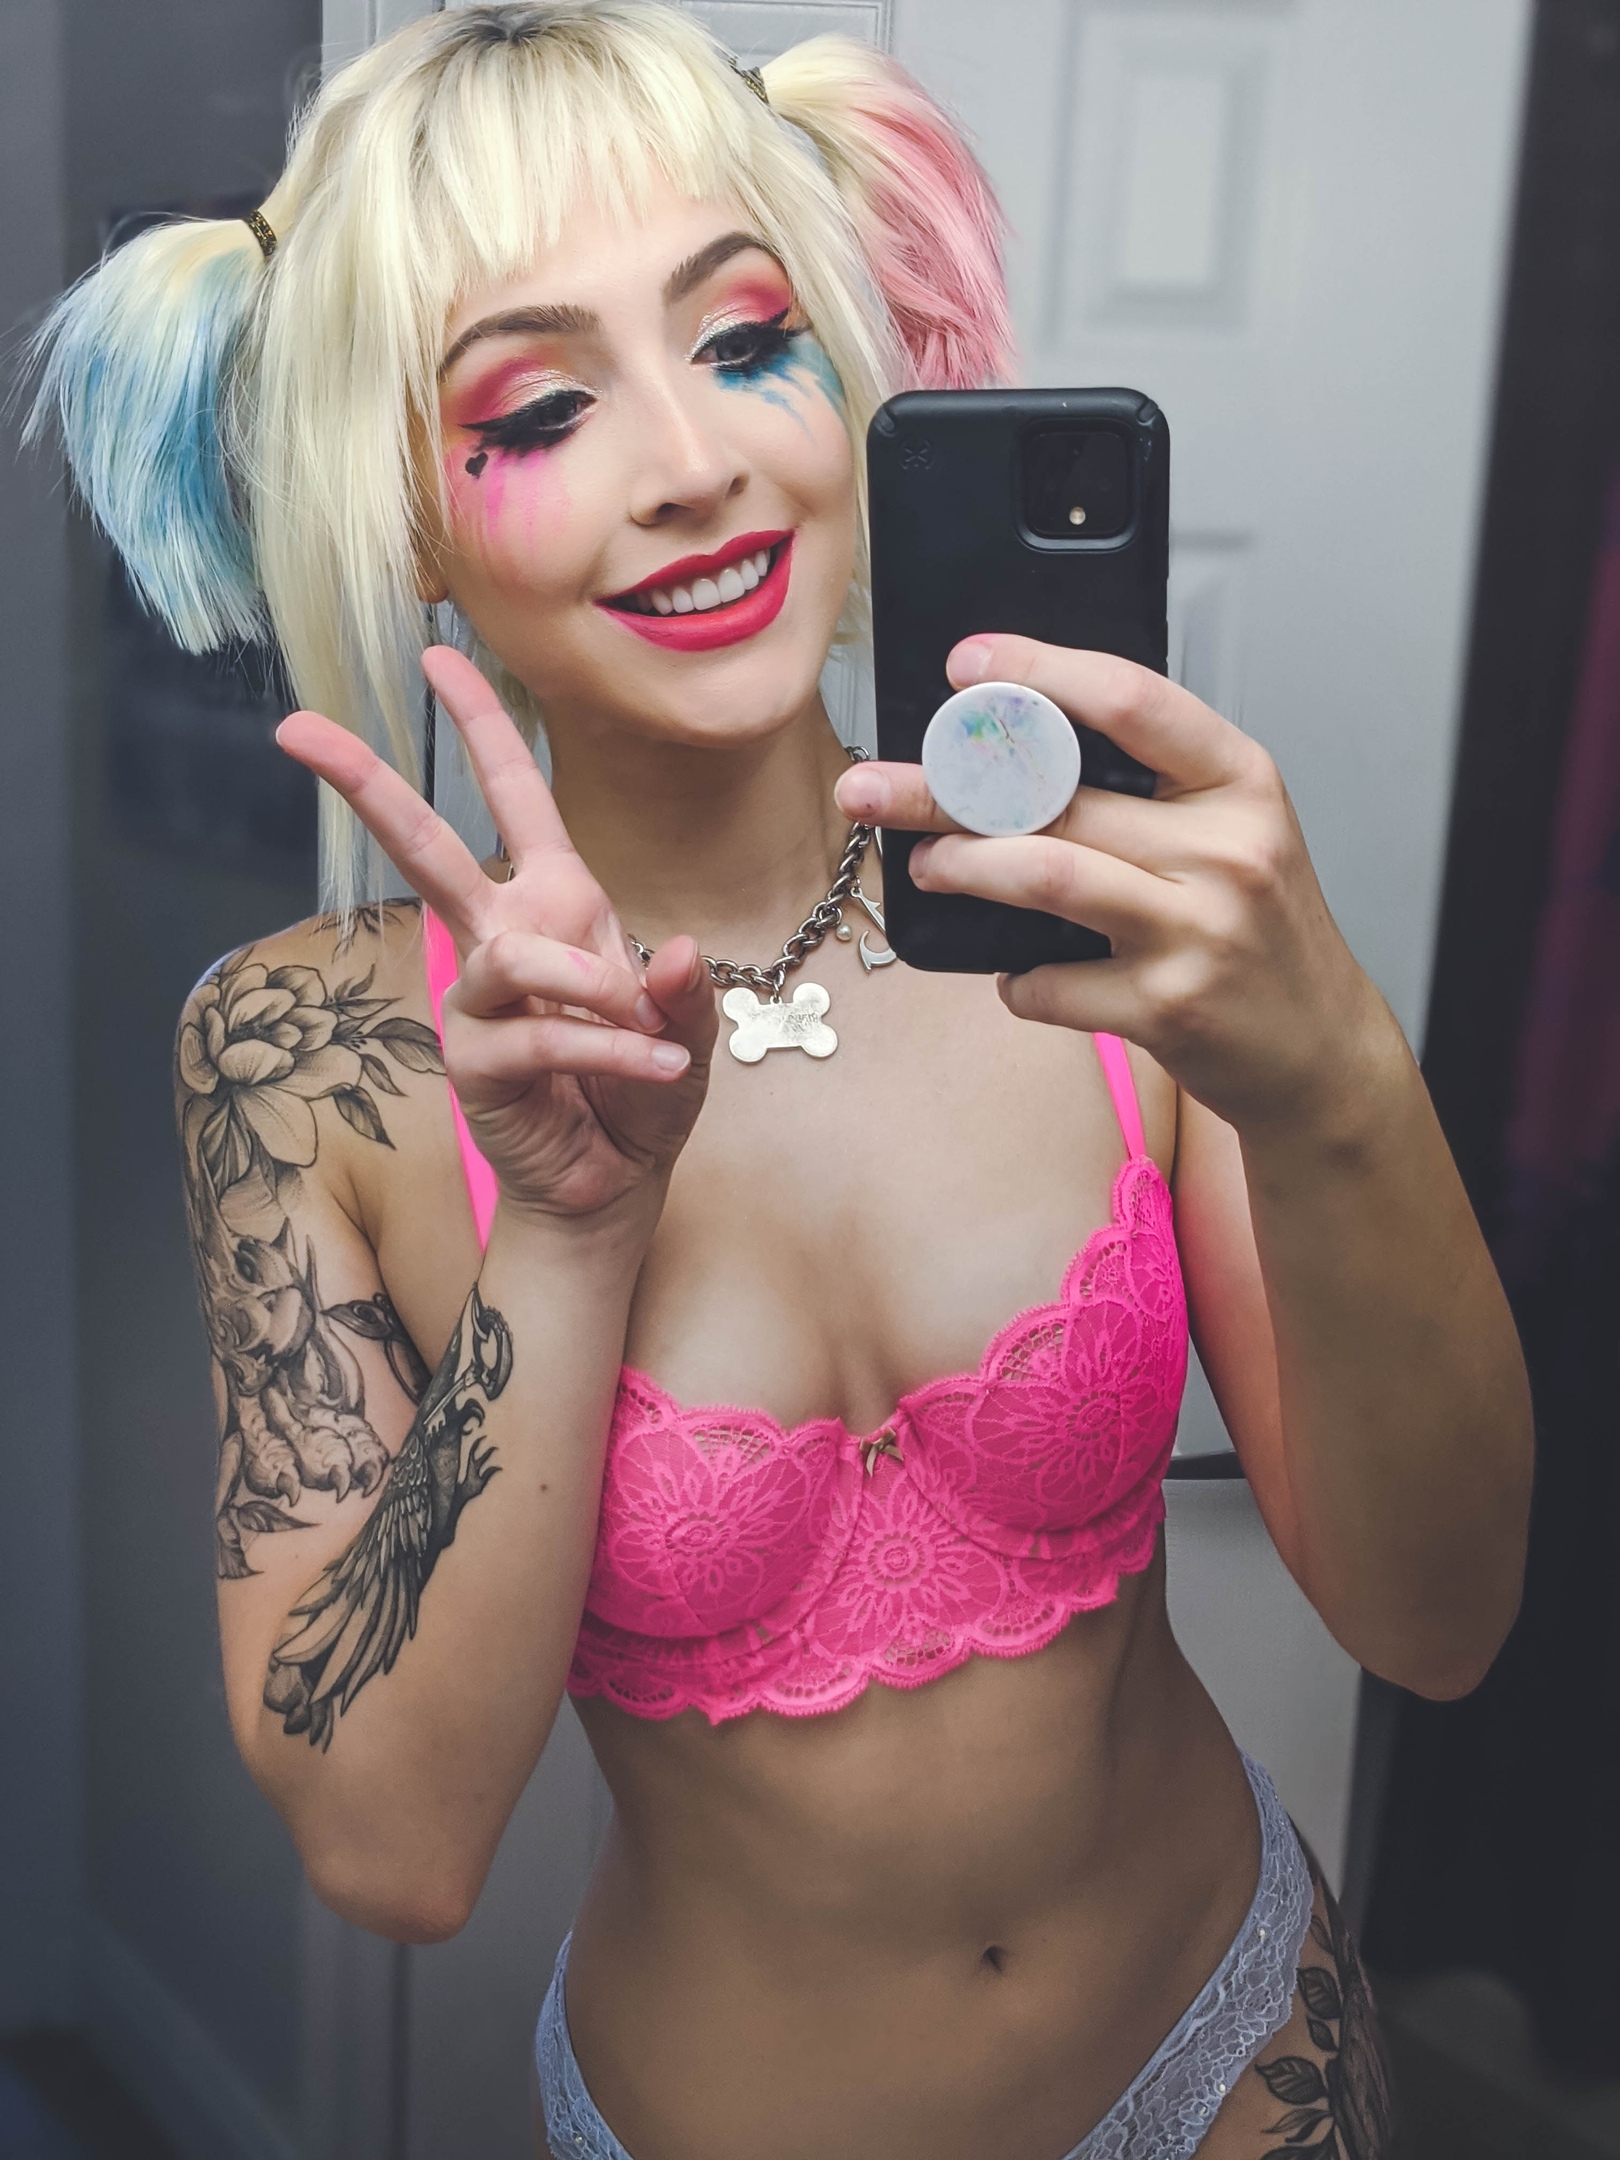  Harley boudoir selfie 